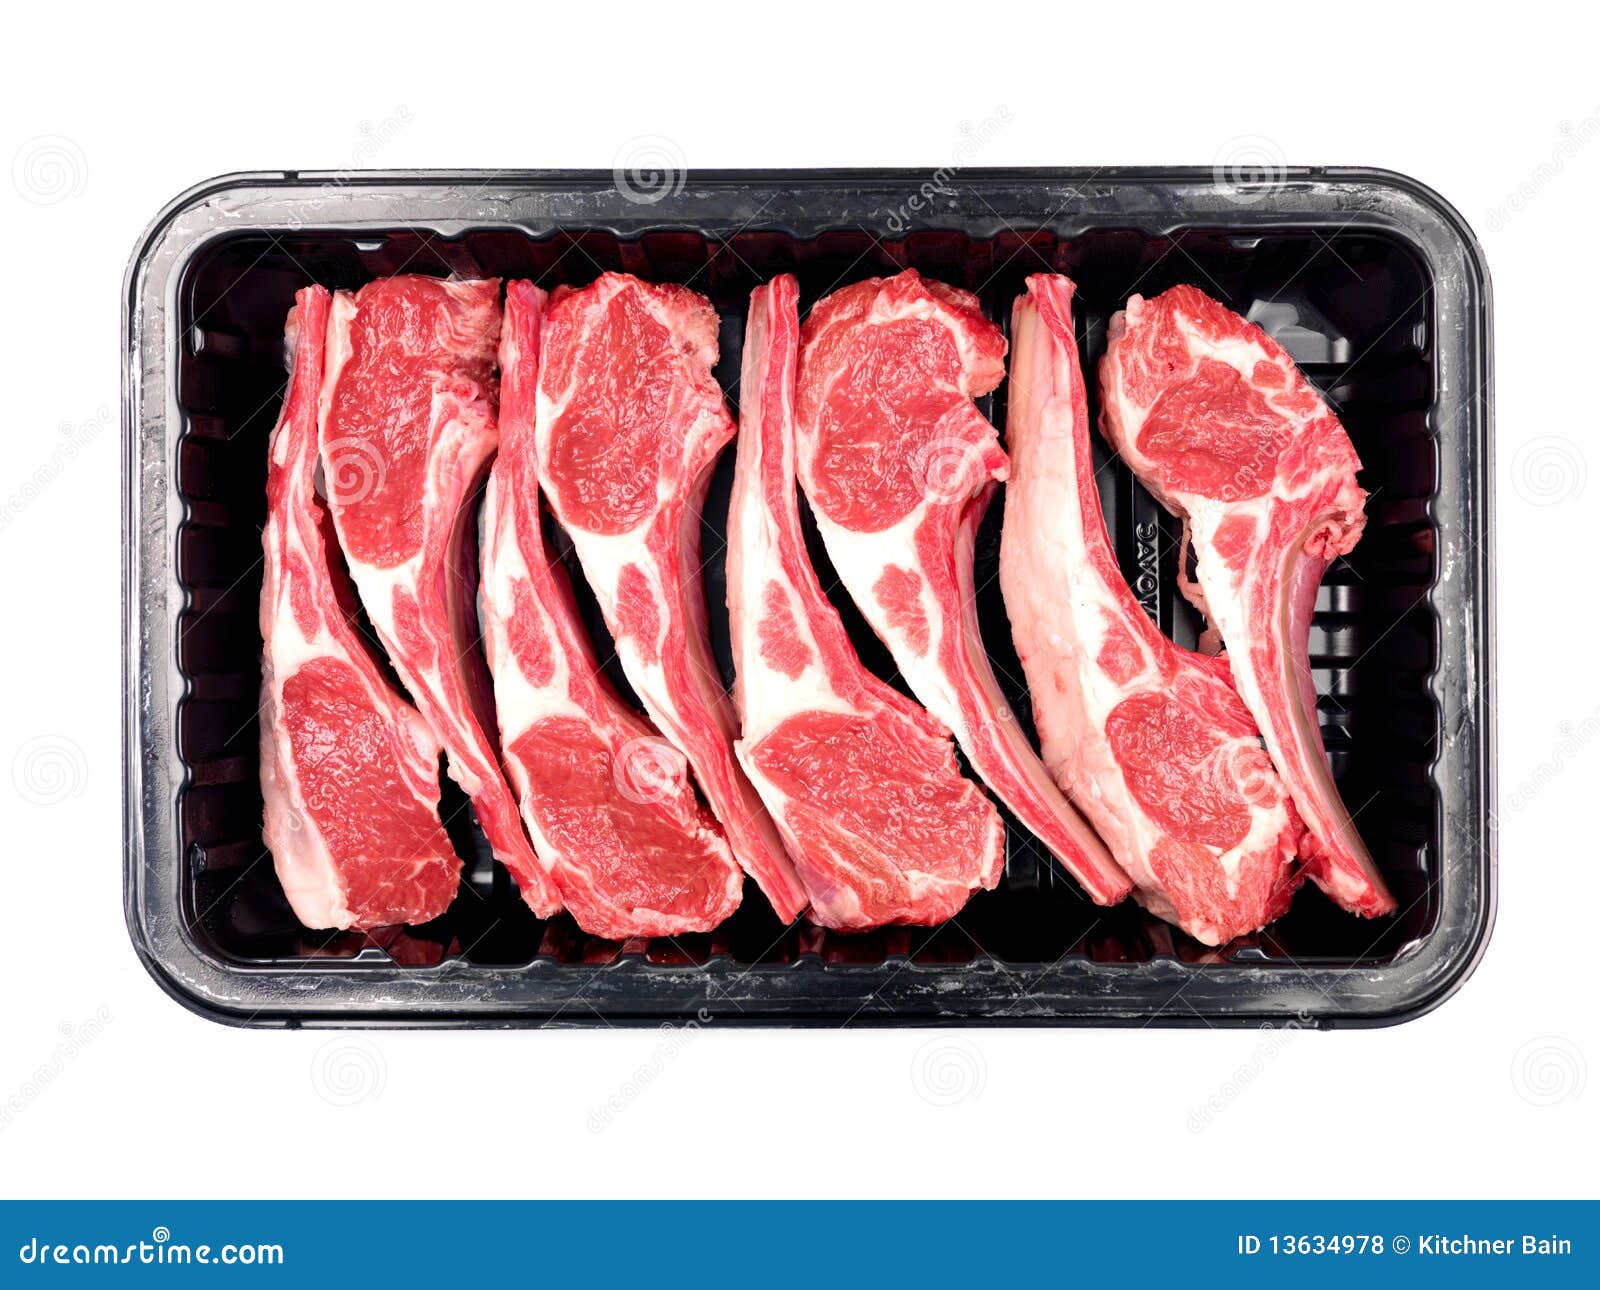 lamb-chop-meat-tray-13634978.jpg